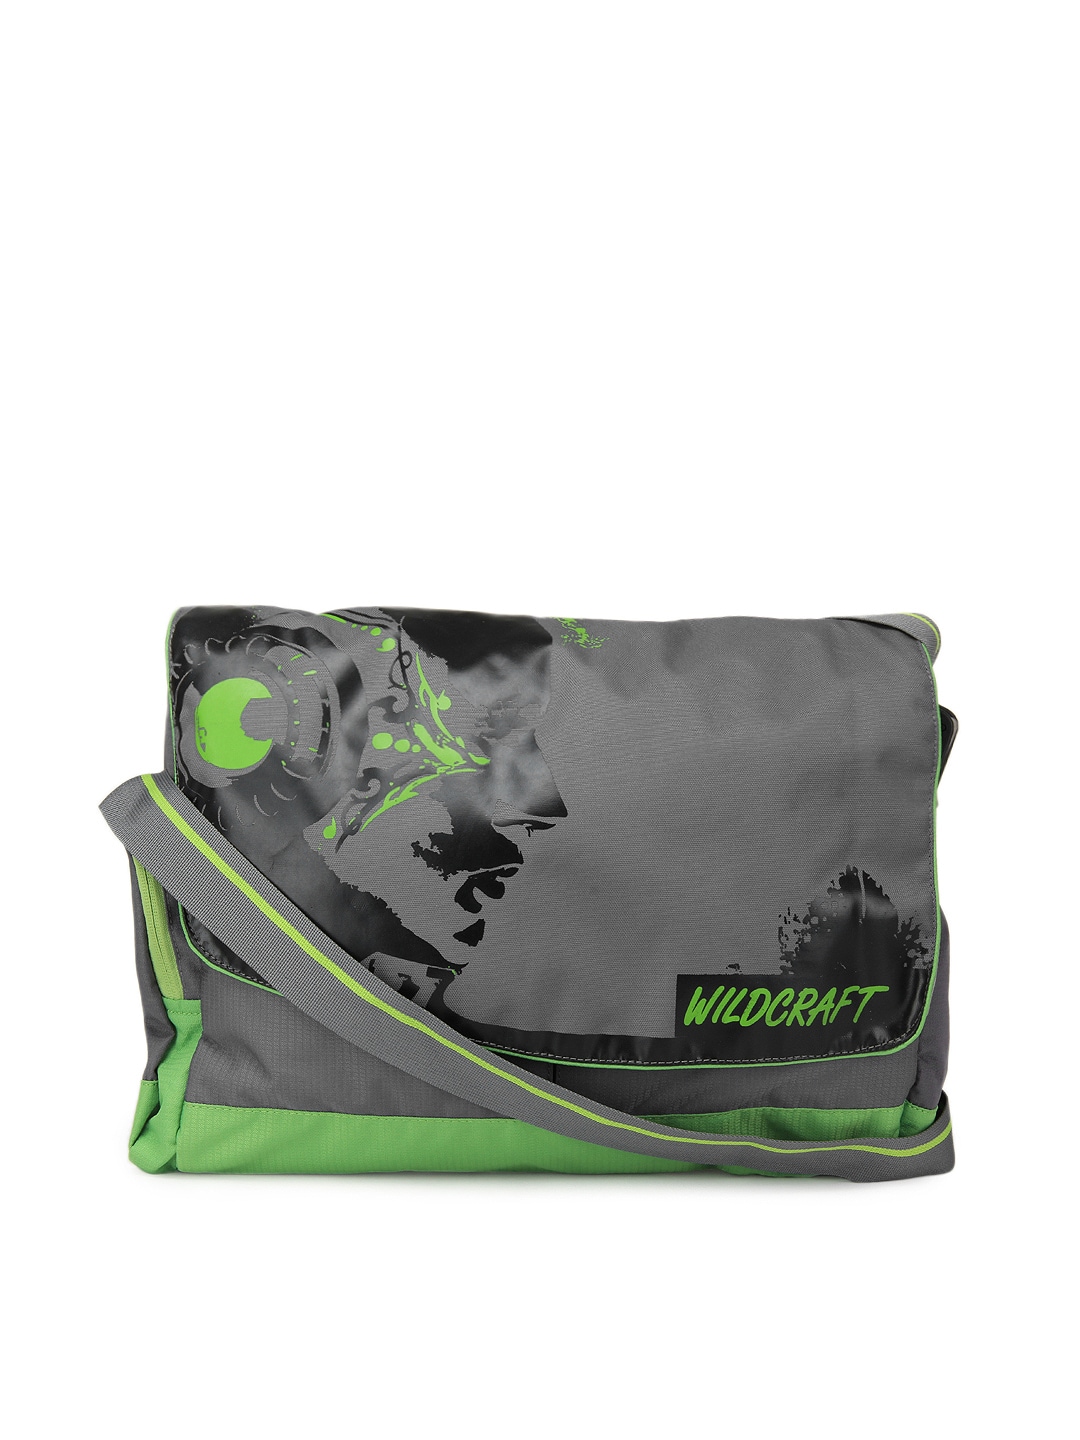 Wildcraft Unisex Grey & Green Printed Messenger Bag